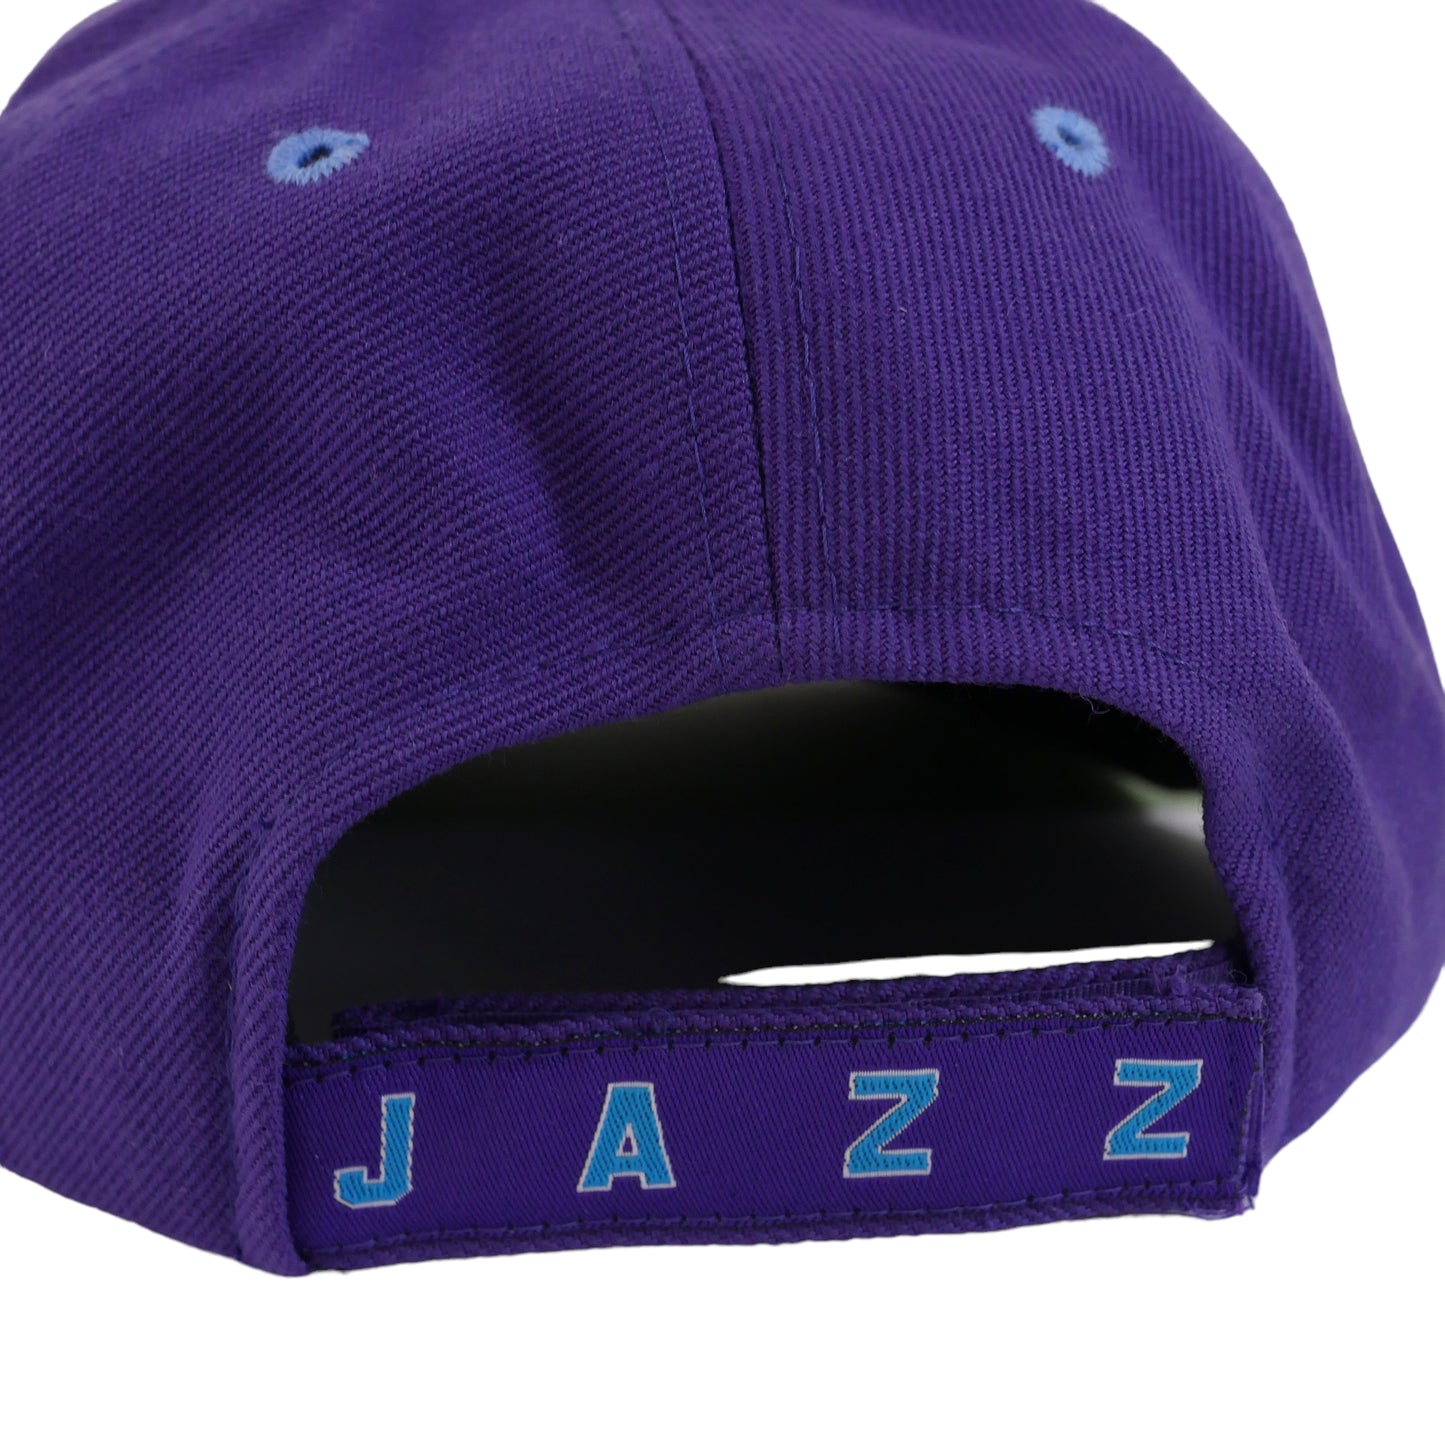 Utah Jazz Drew Pearson Hat